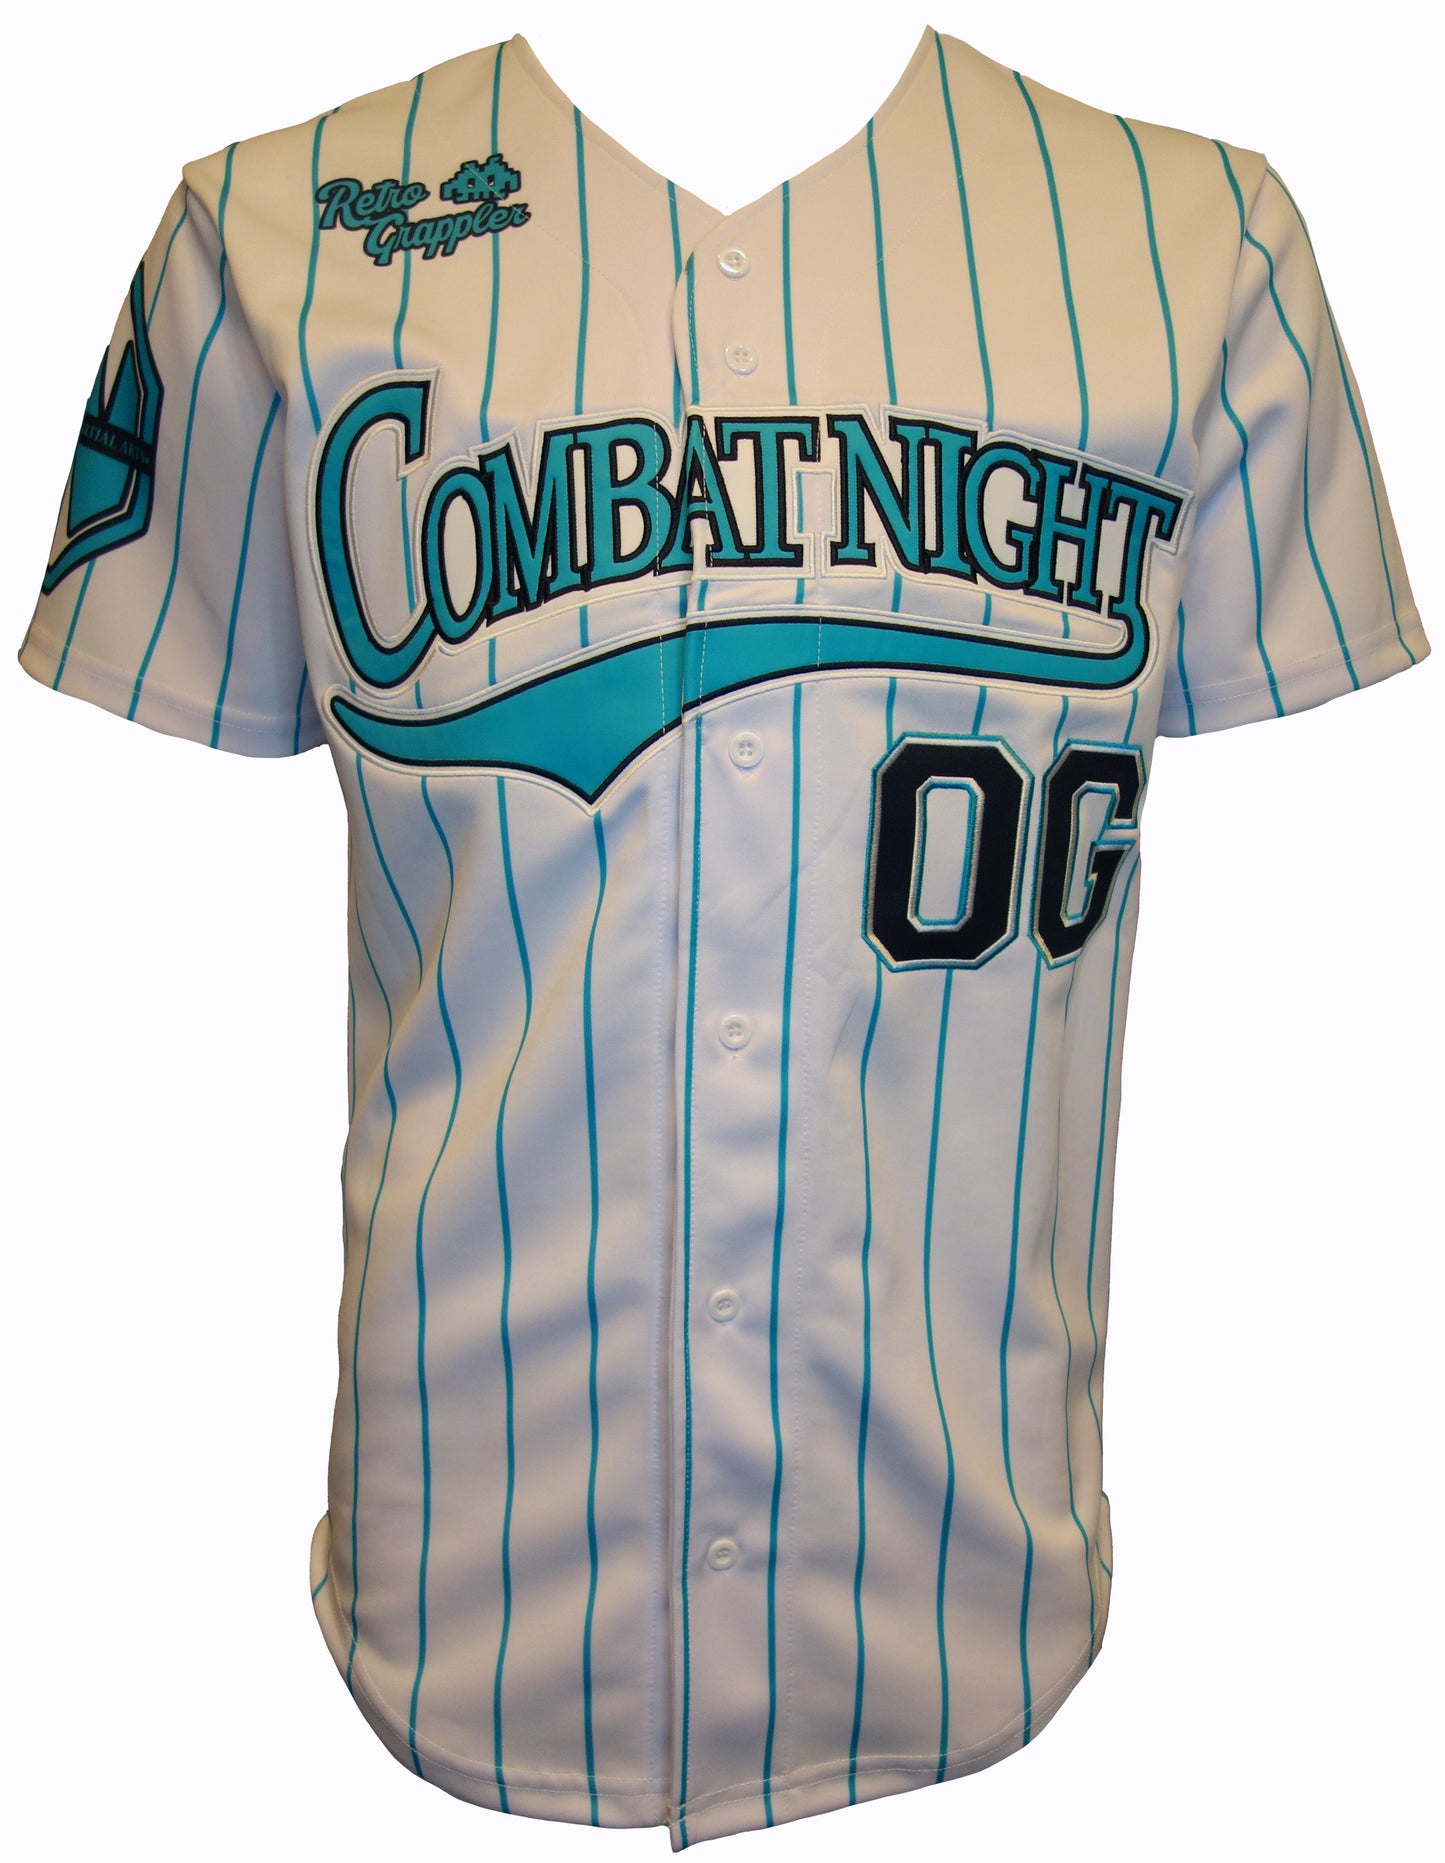 Combat Night OG Vintage Marlin's Baseball Jersey